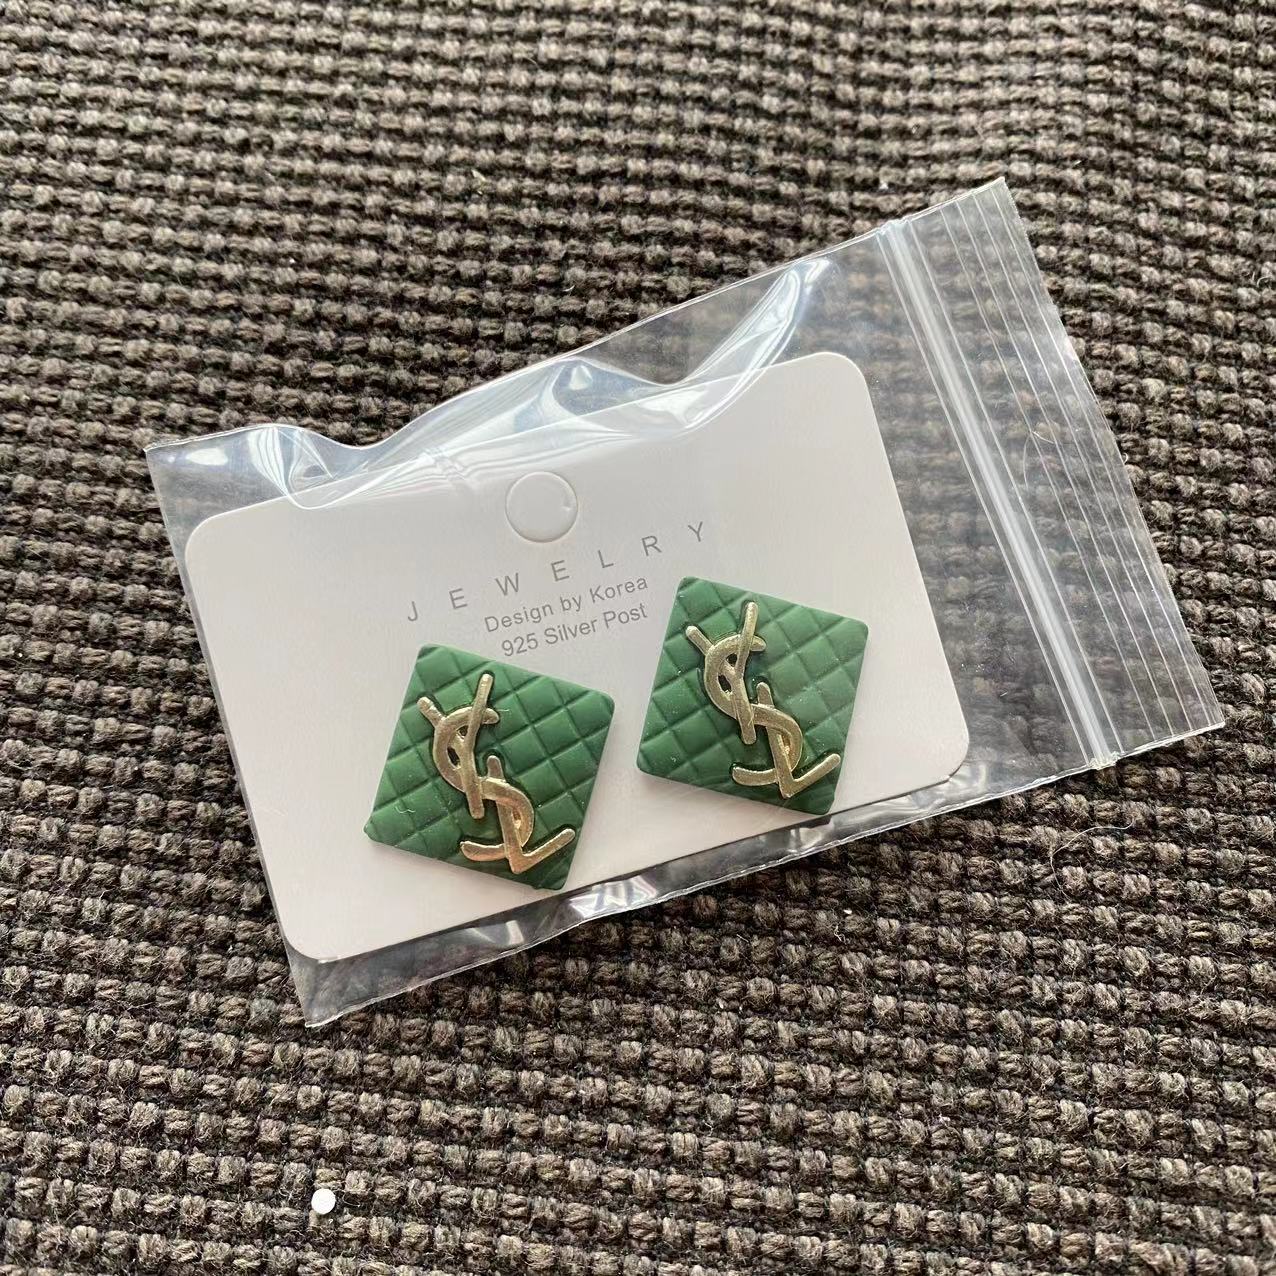 Big sale! Ysl Green square earrings New